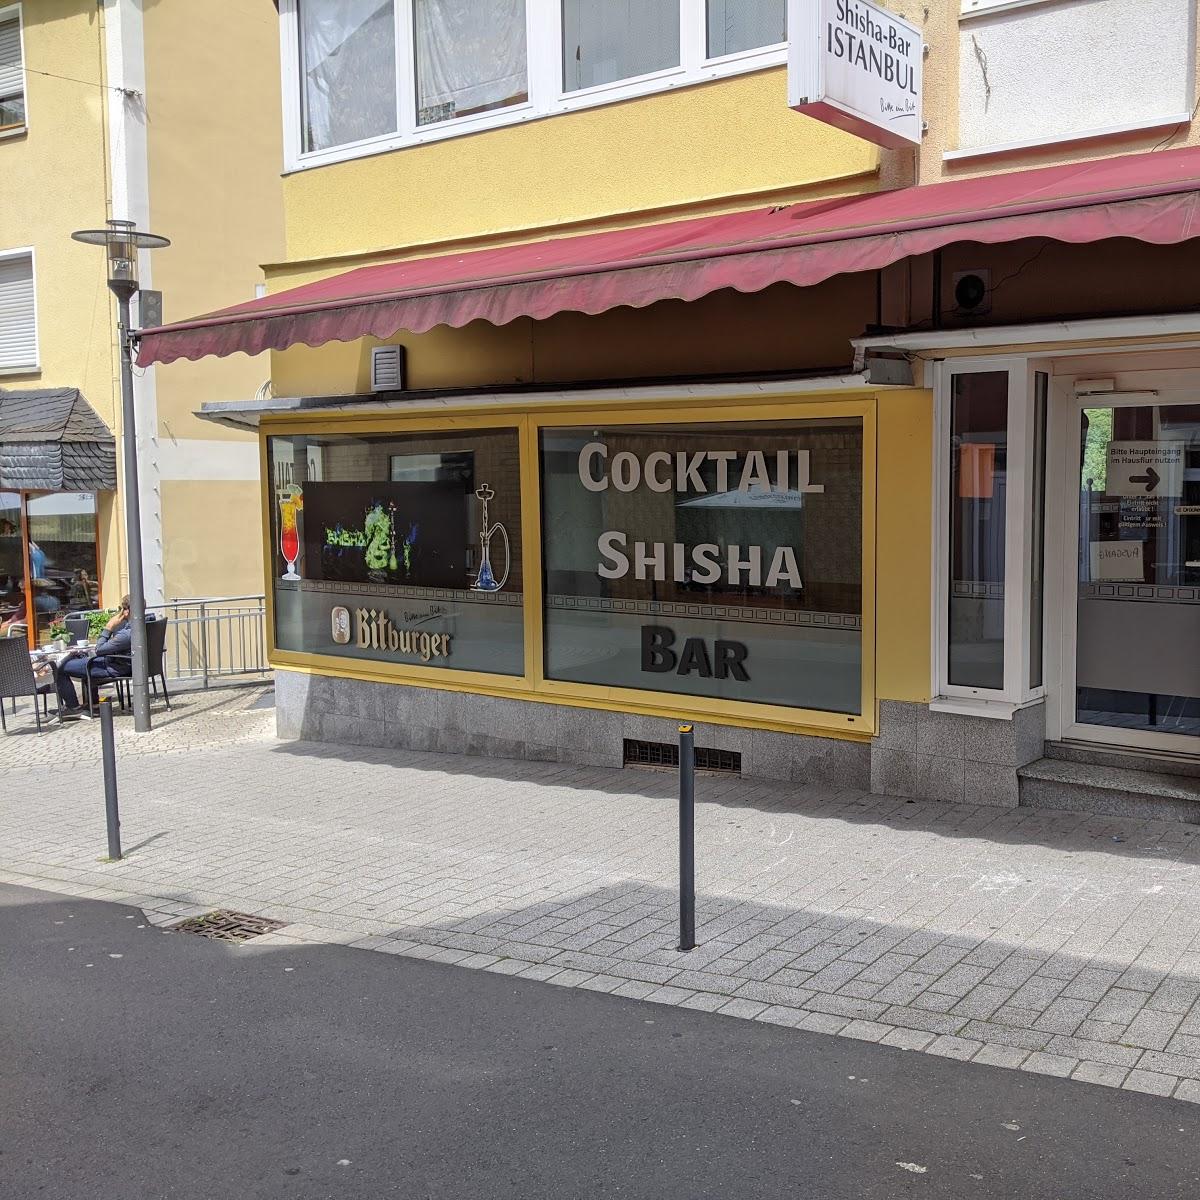 Restaurant "Shishabar Istanbul" in Gerolstein